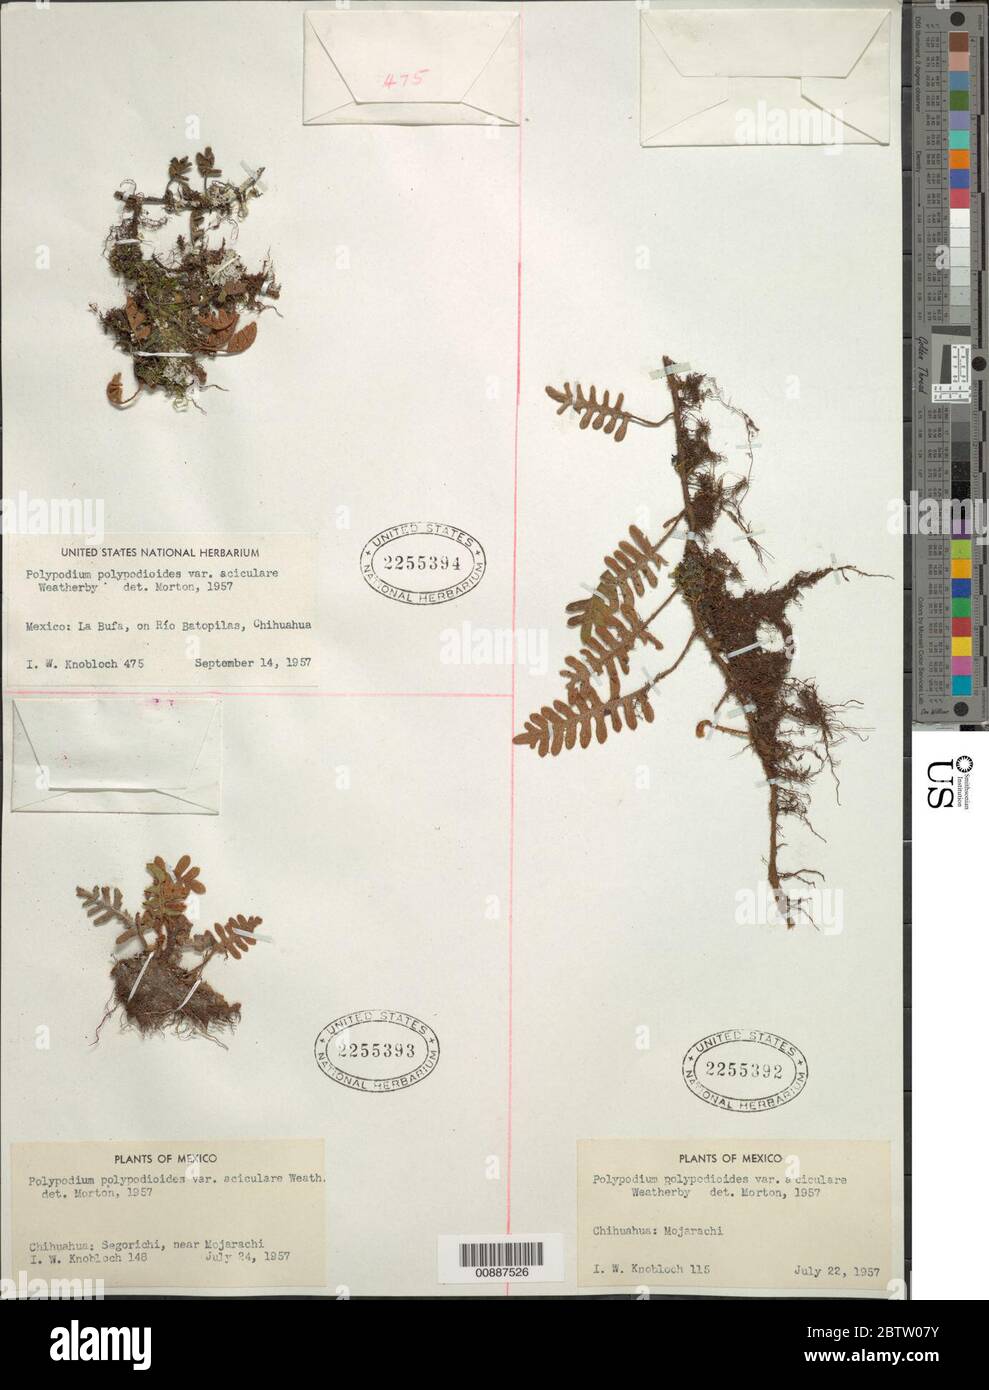 Pleopeltis polypodioides var acicularis Weath EG Andrews Windham. Stock Photo